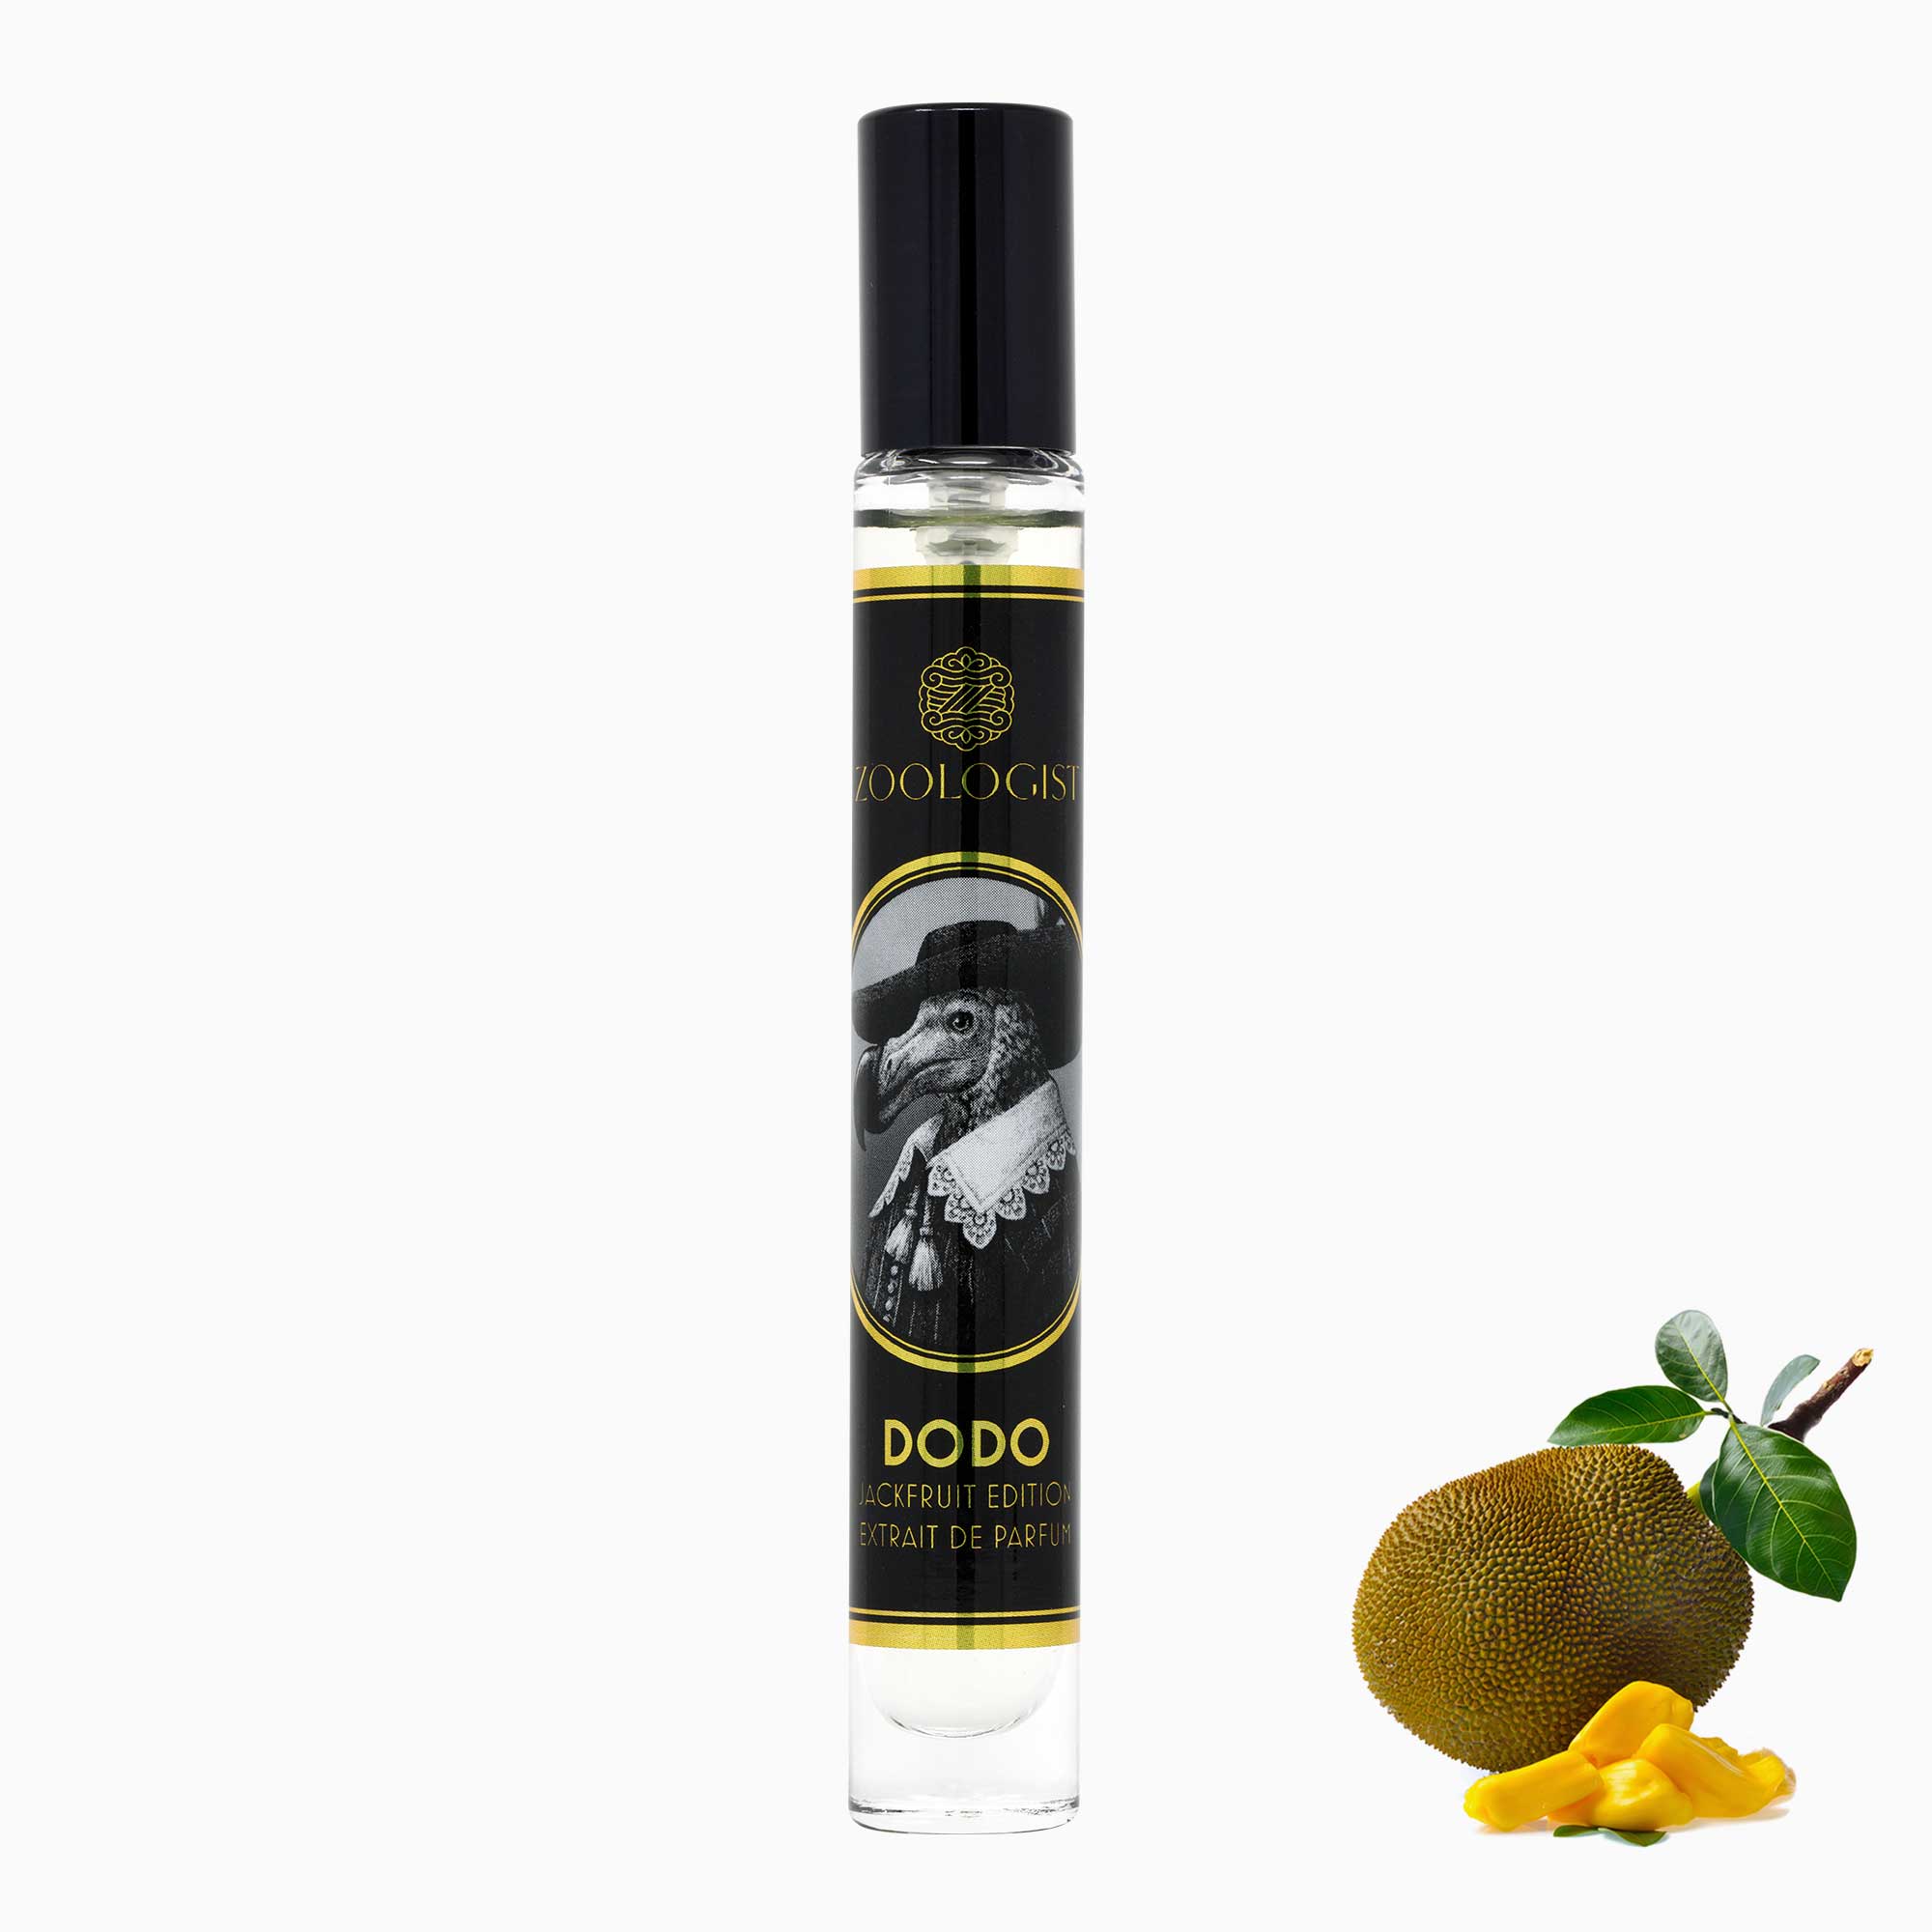 Zoologist Dodo Jackfruit Edition Travel Spray